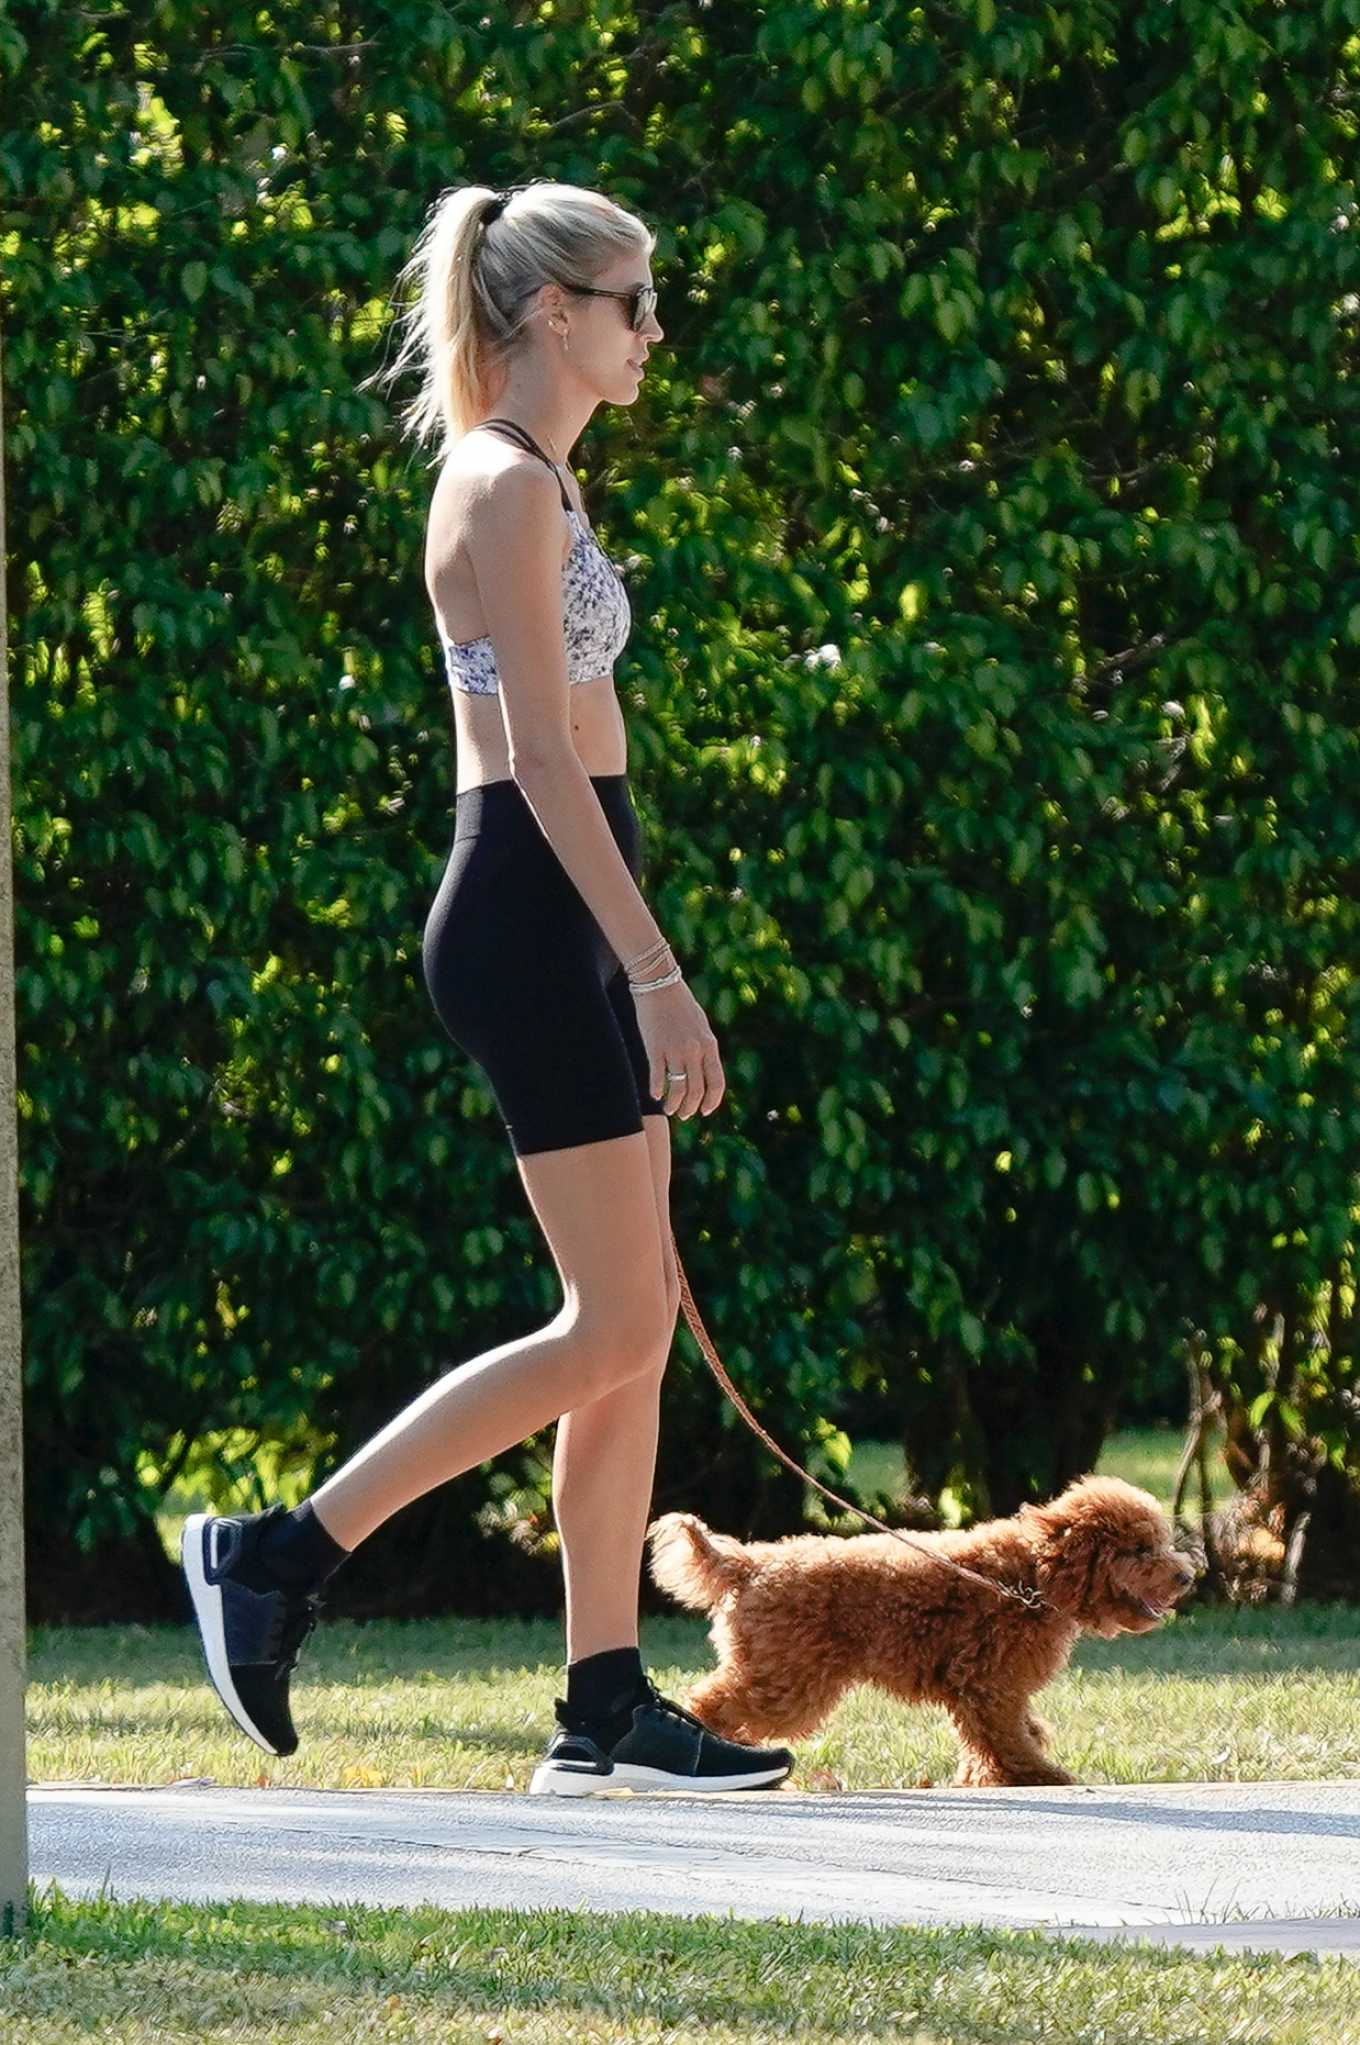 Devon Windsor â€“ Jogging while walking her dog in Miami